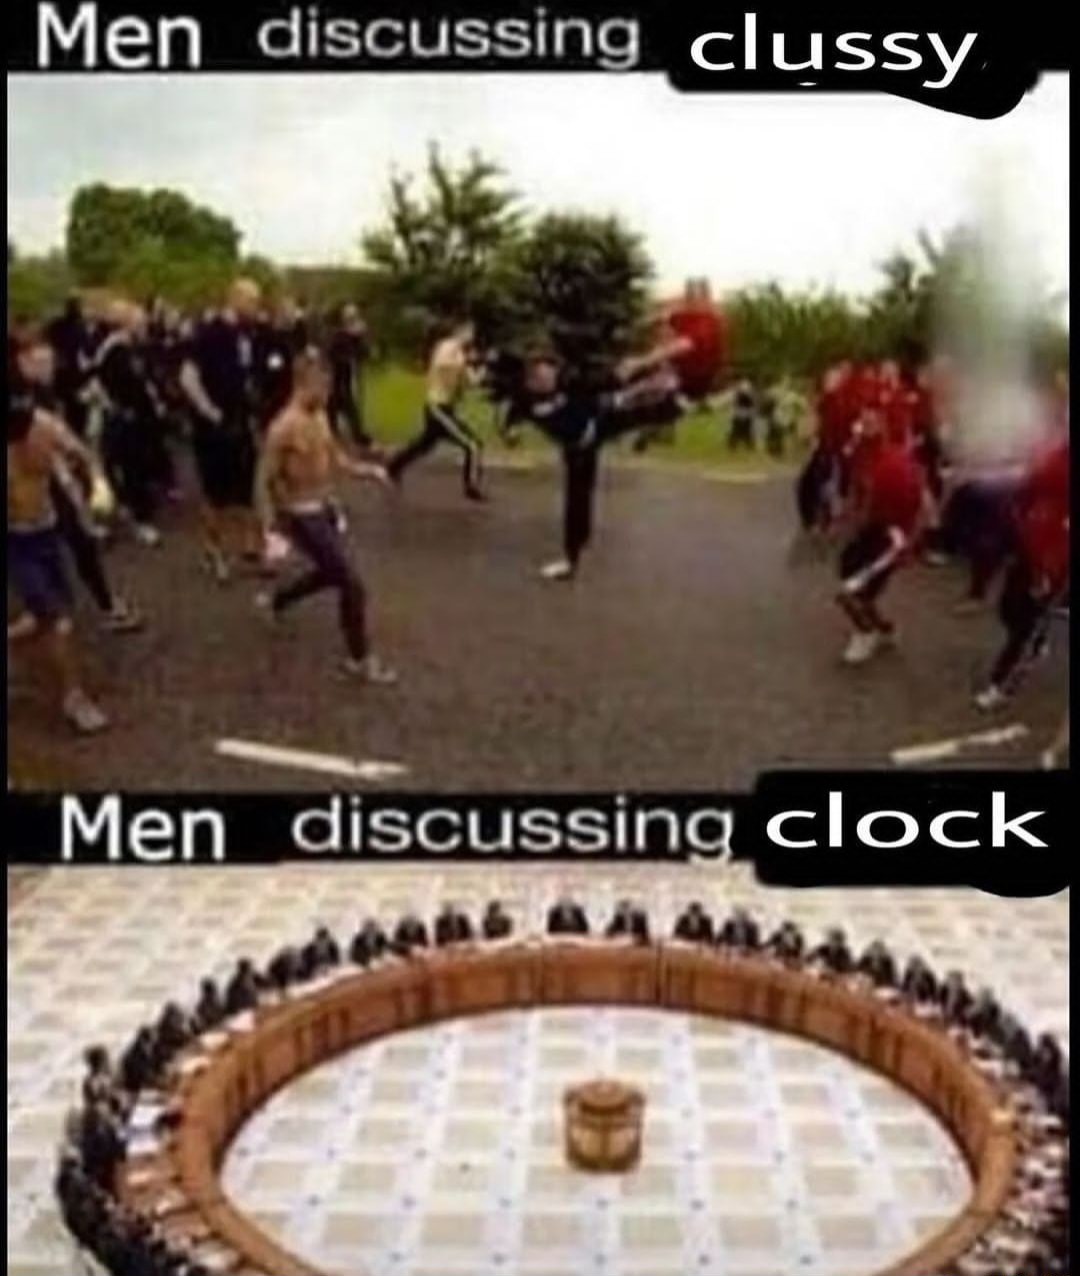 Clussy and clock - meme